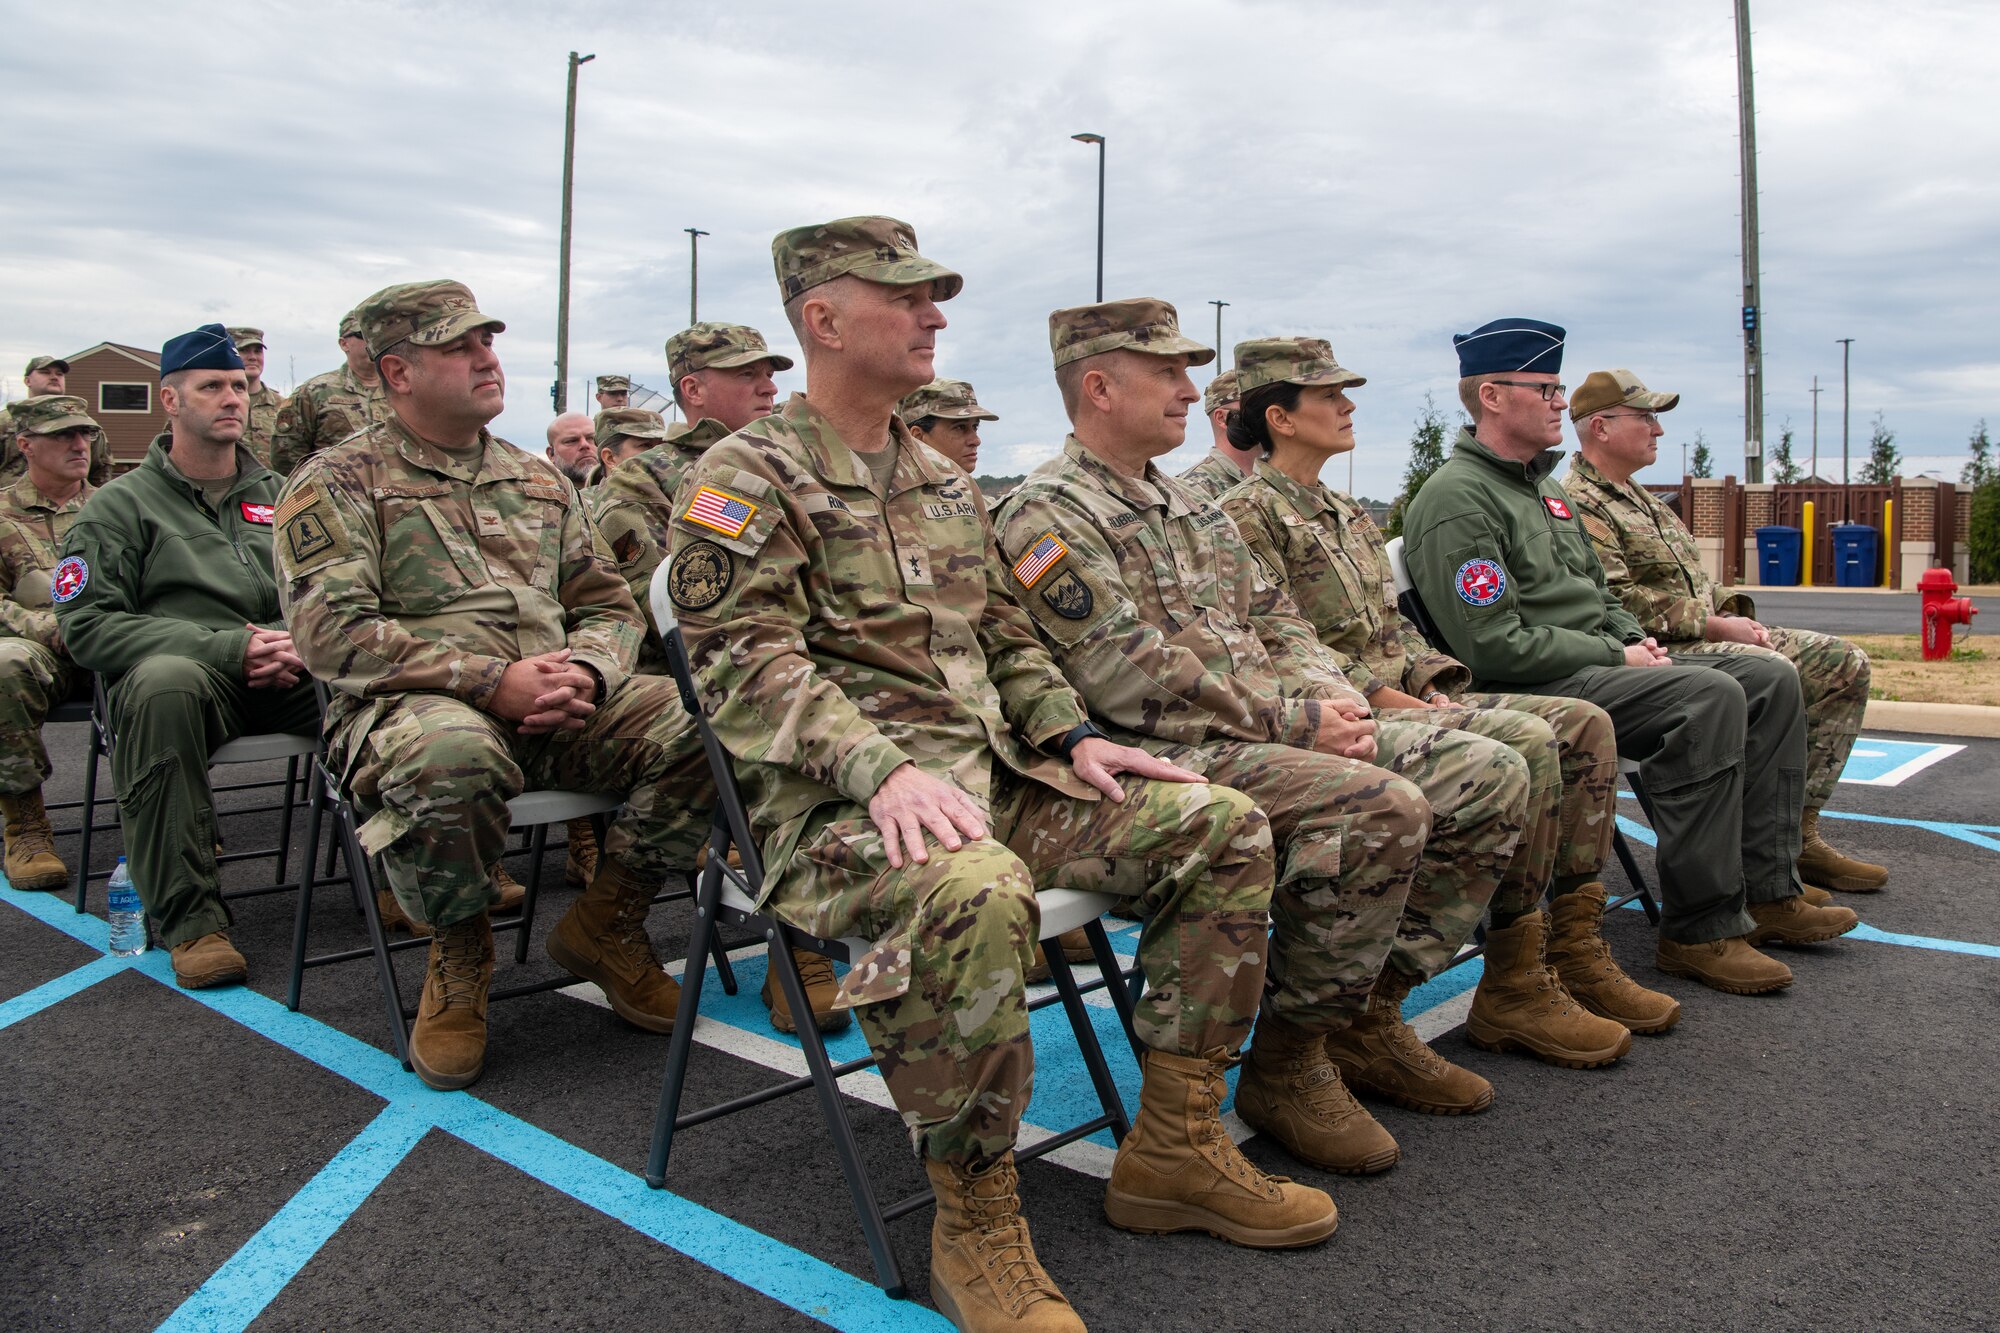 Military members sitting in audience.